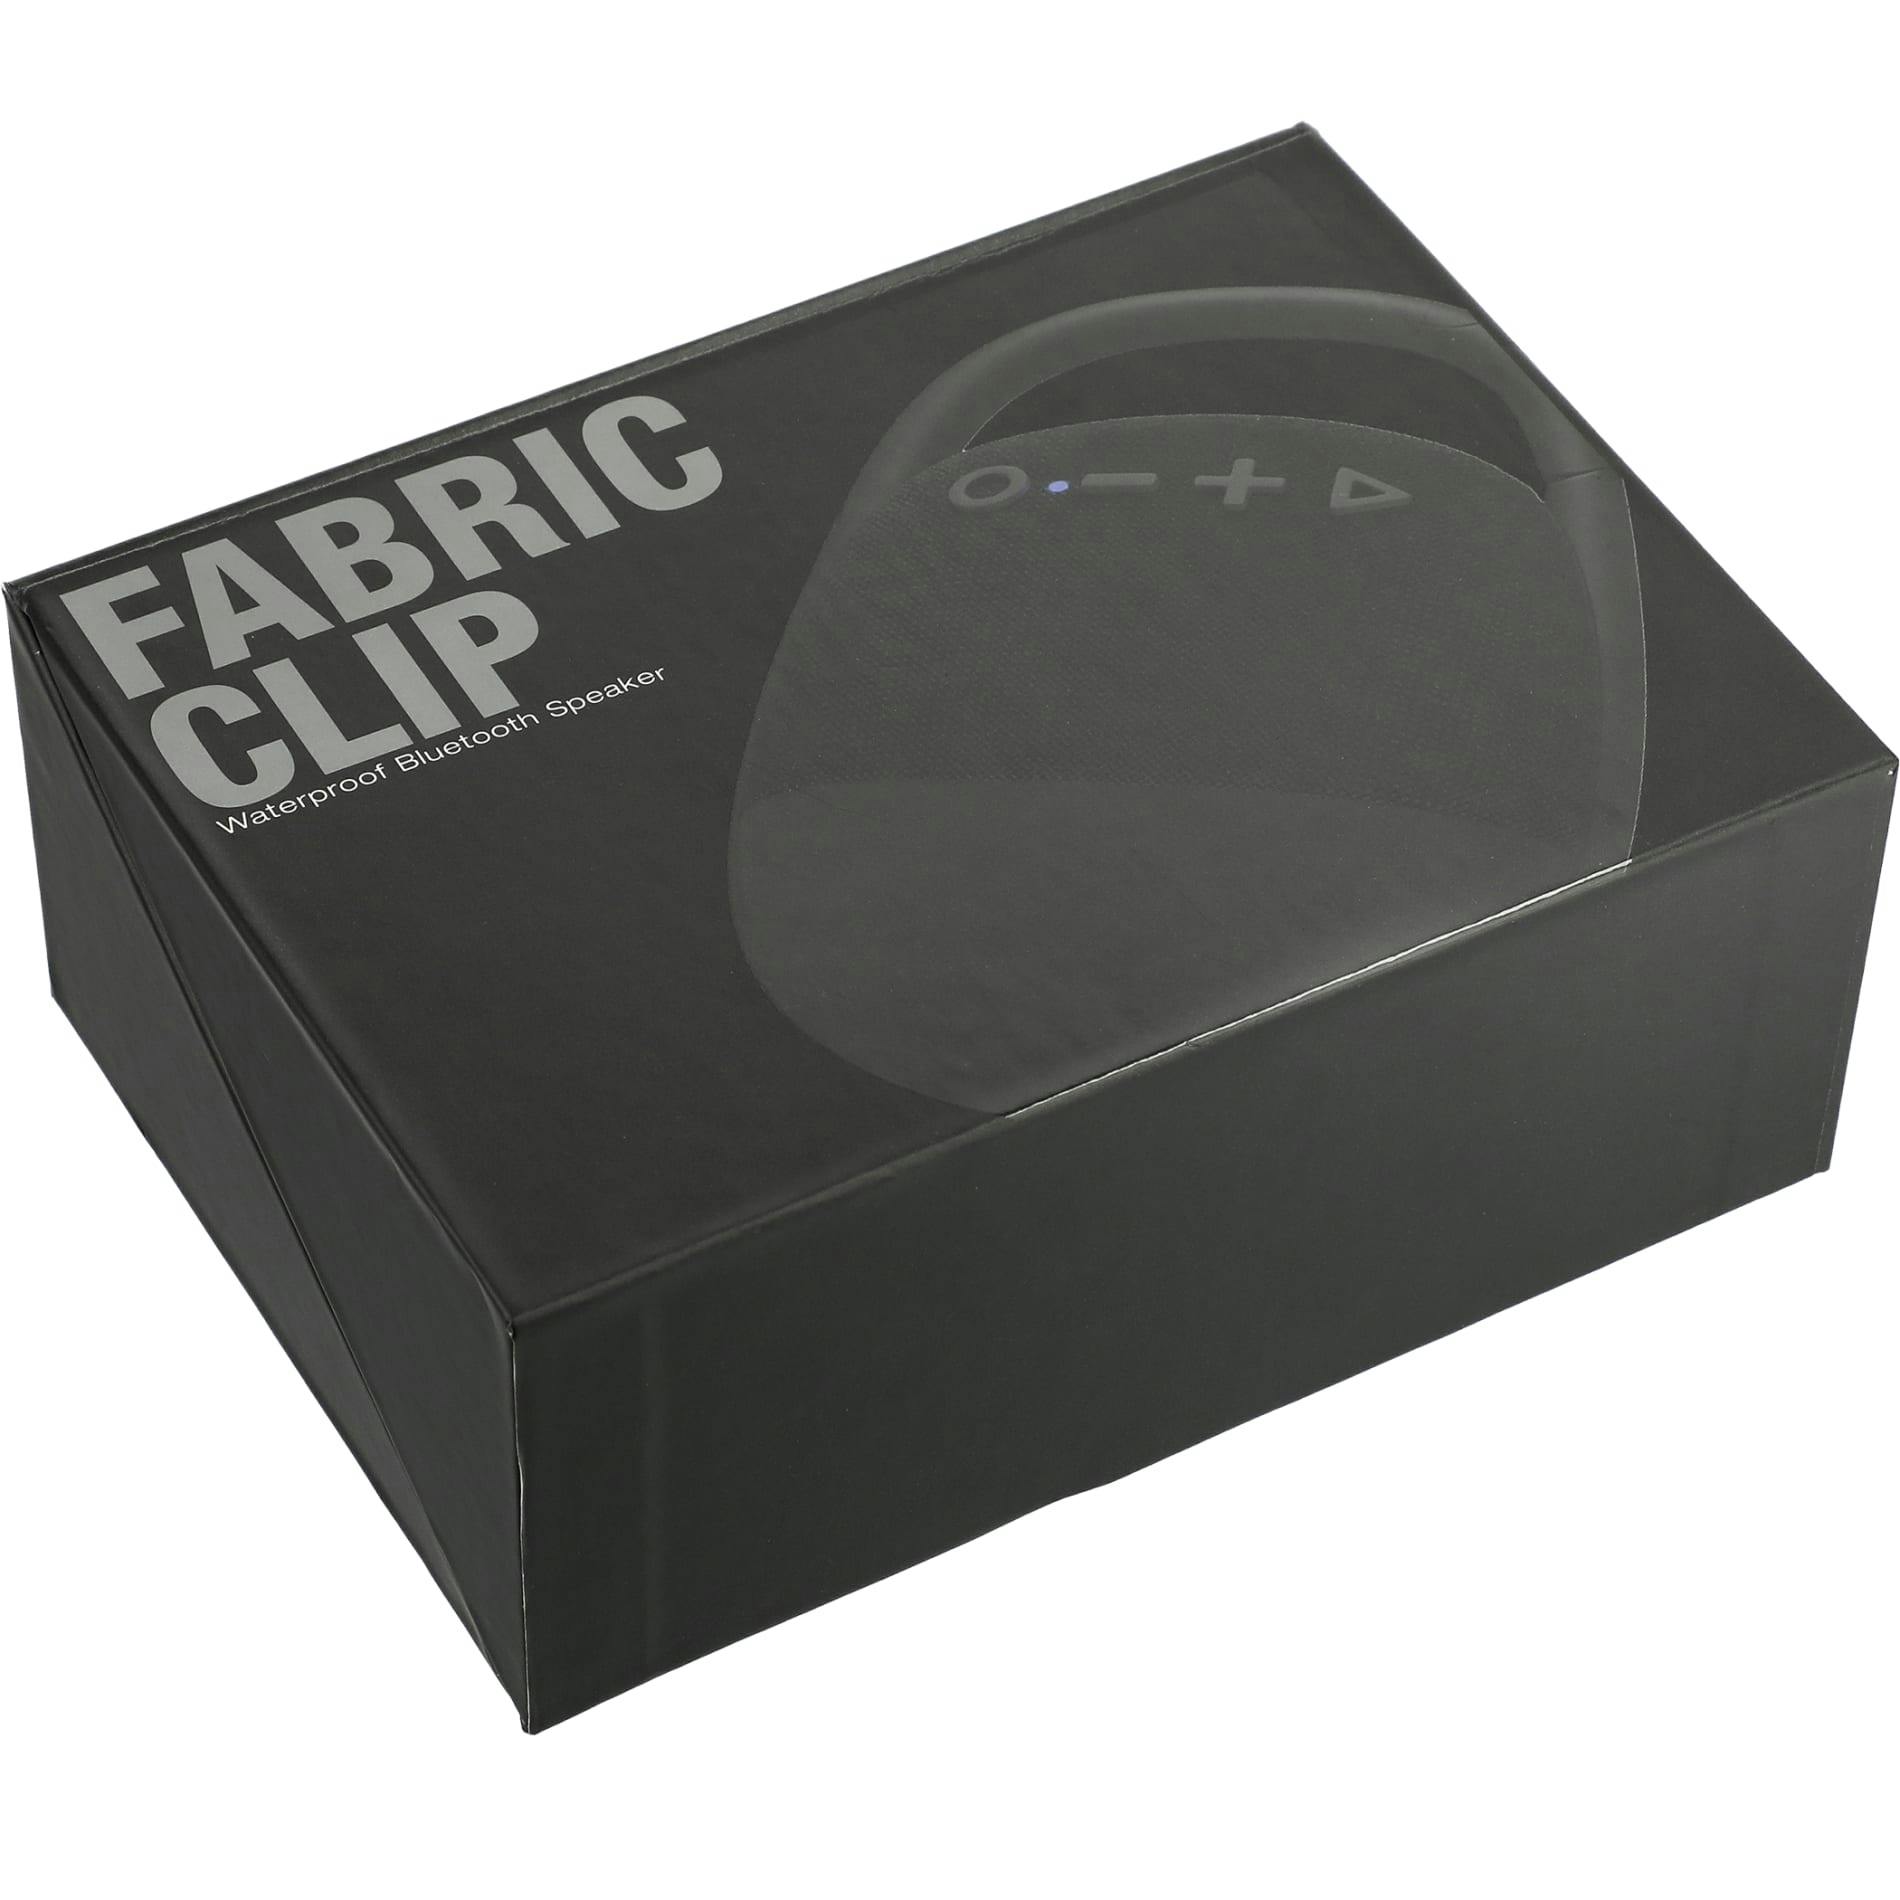 Fabric Clip Waterproof Bluetooth Speaker - additional Image 4